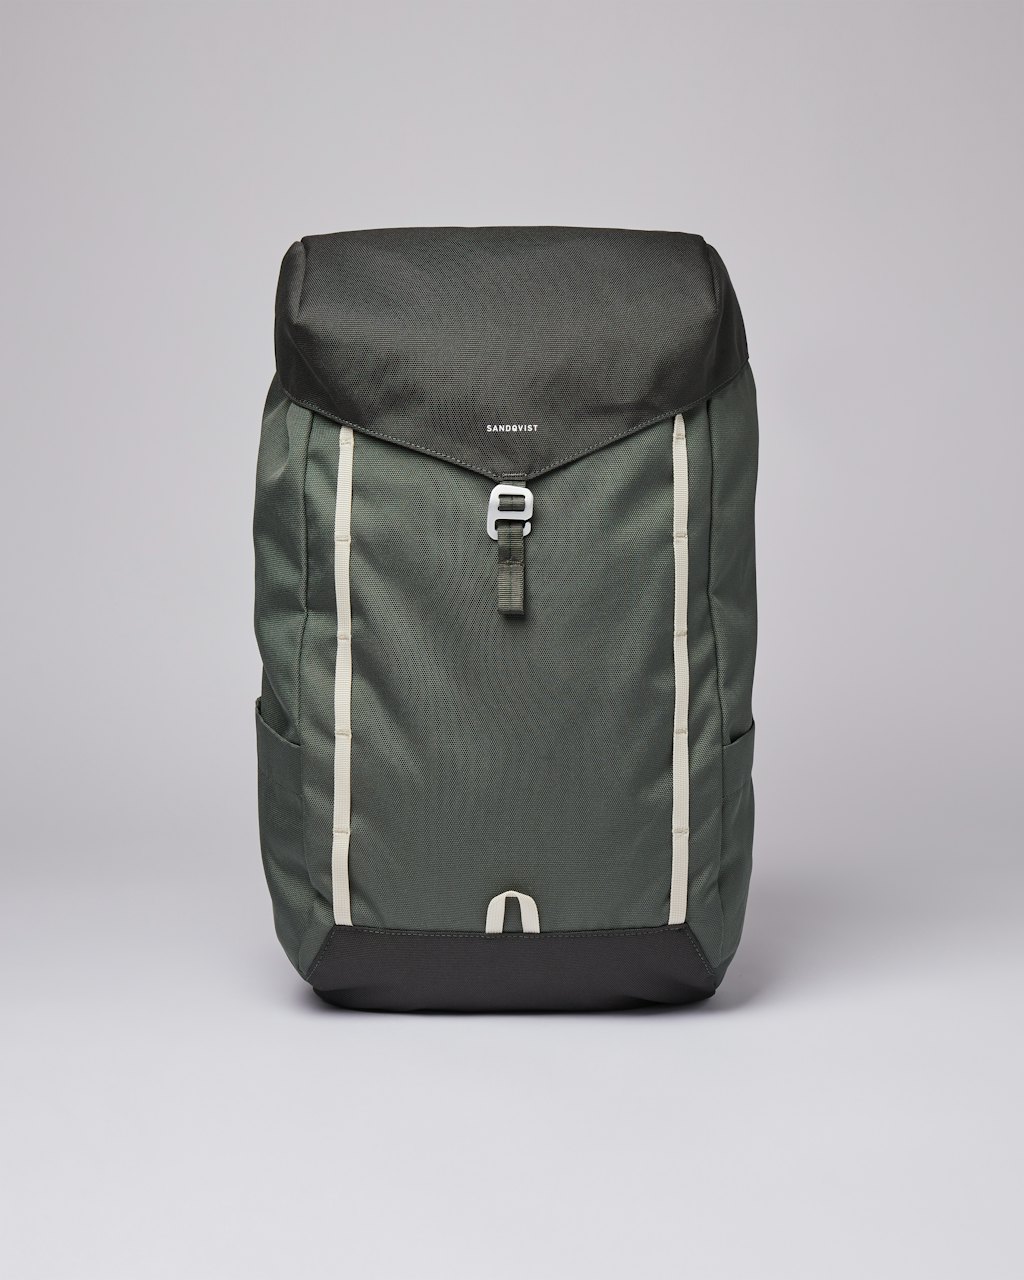 Walter - Backpack - Multi Green | Sandqvist